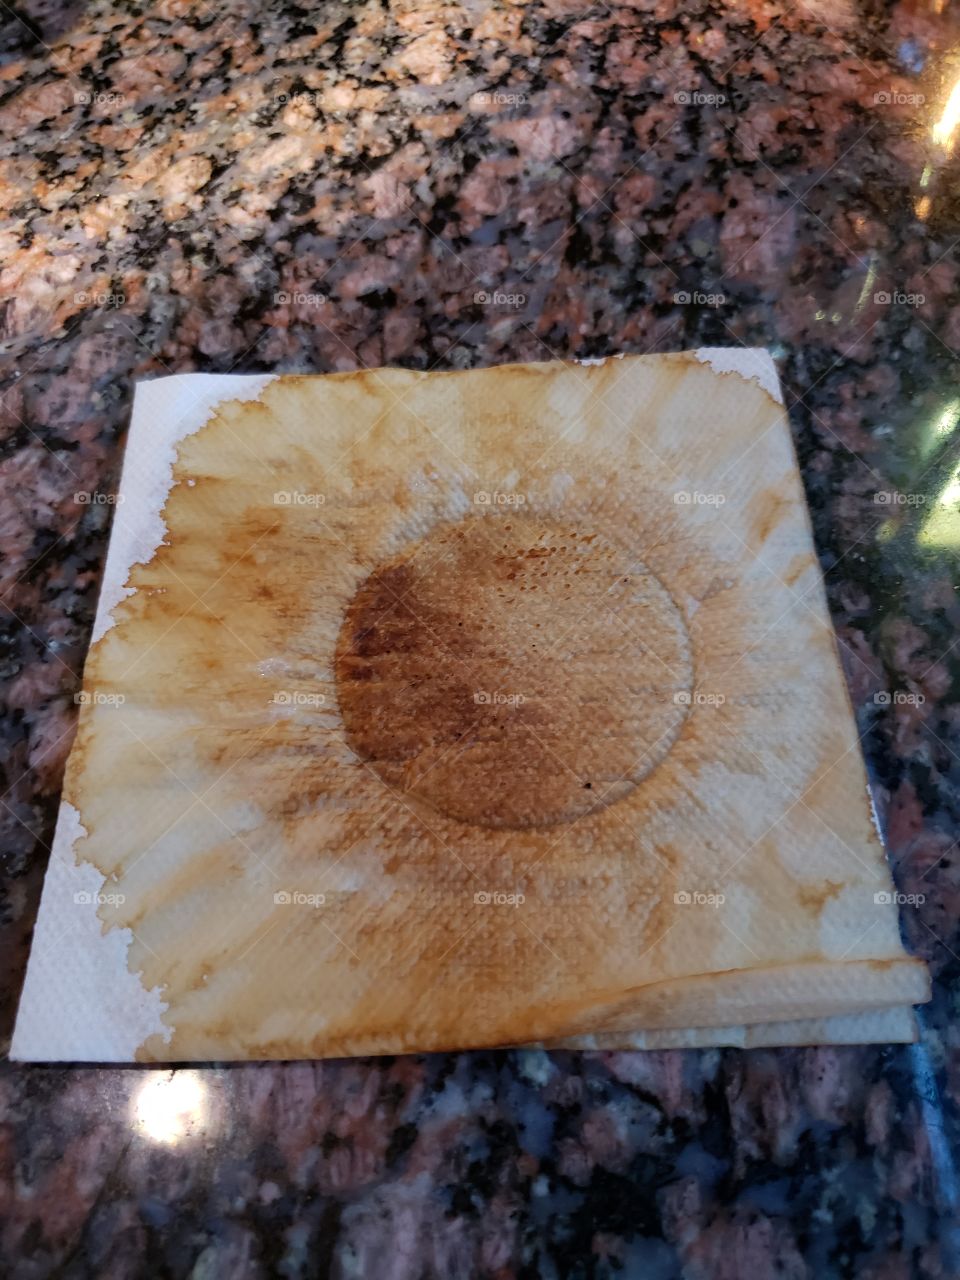 Vietnamese coffee stain on napkin, looks like sunflower